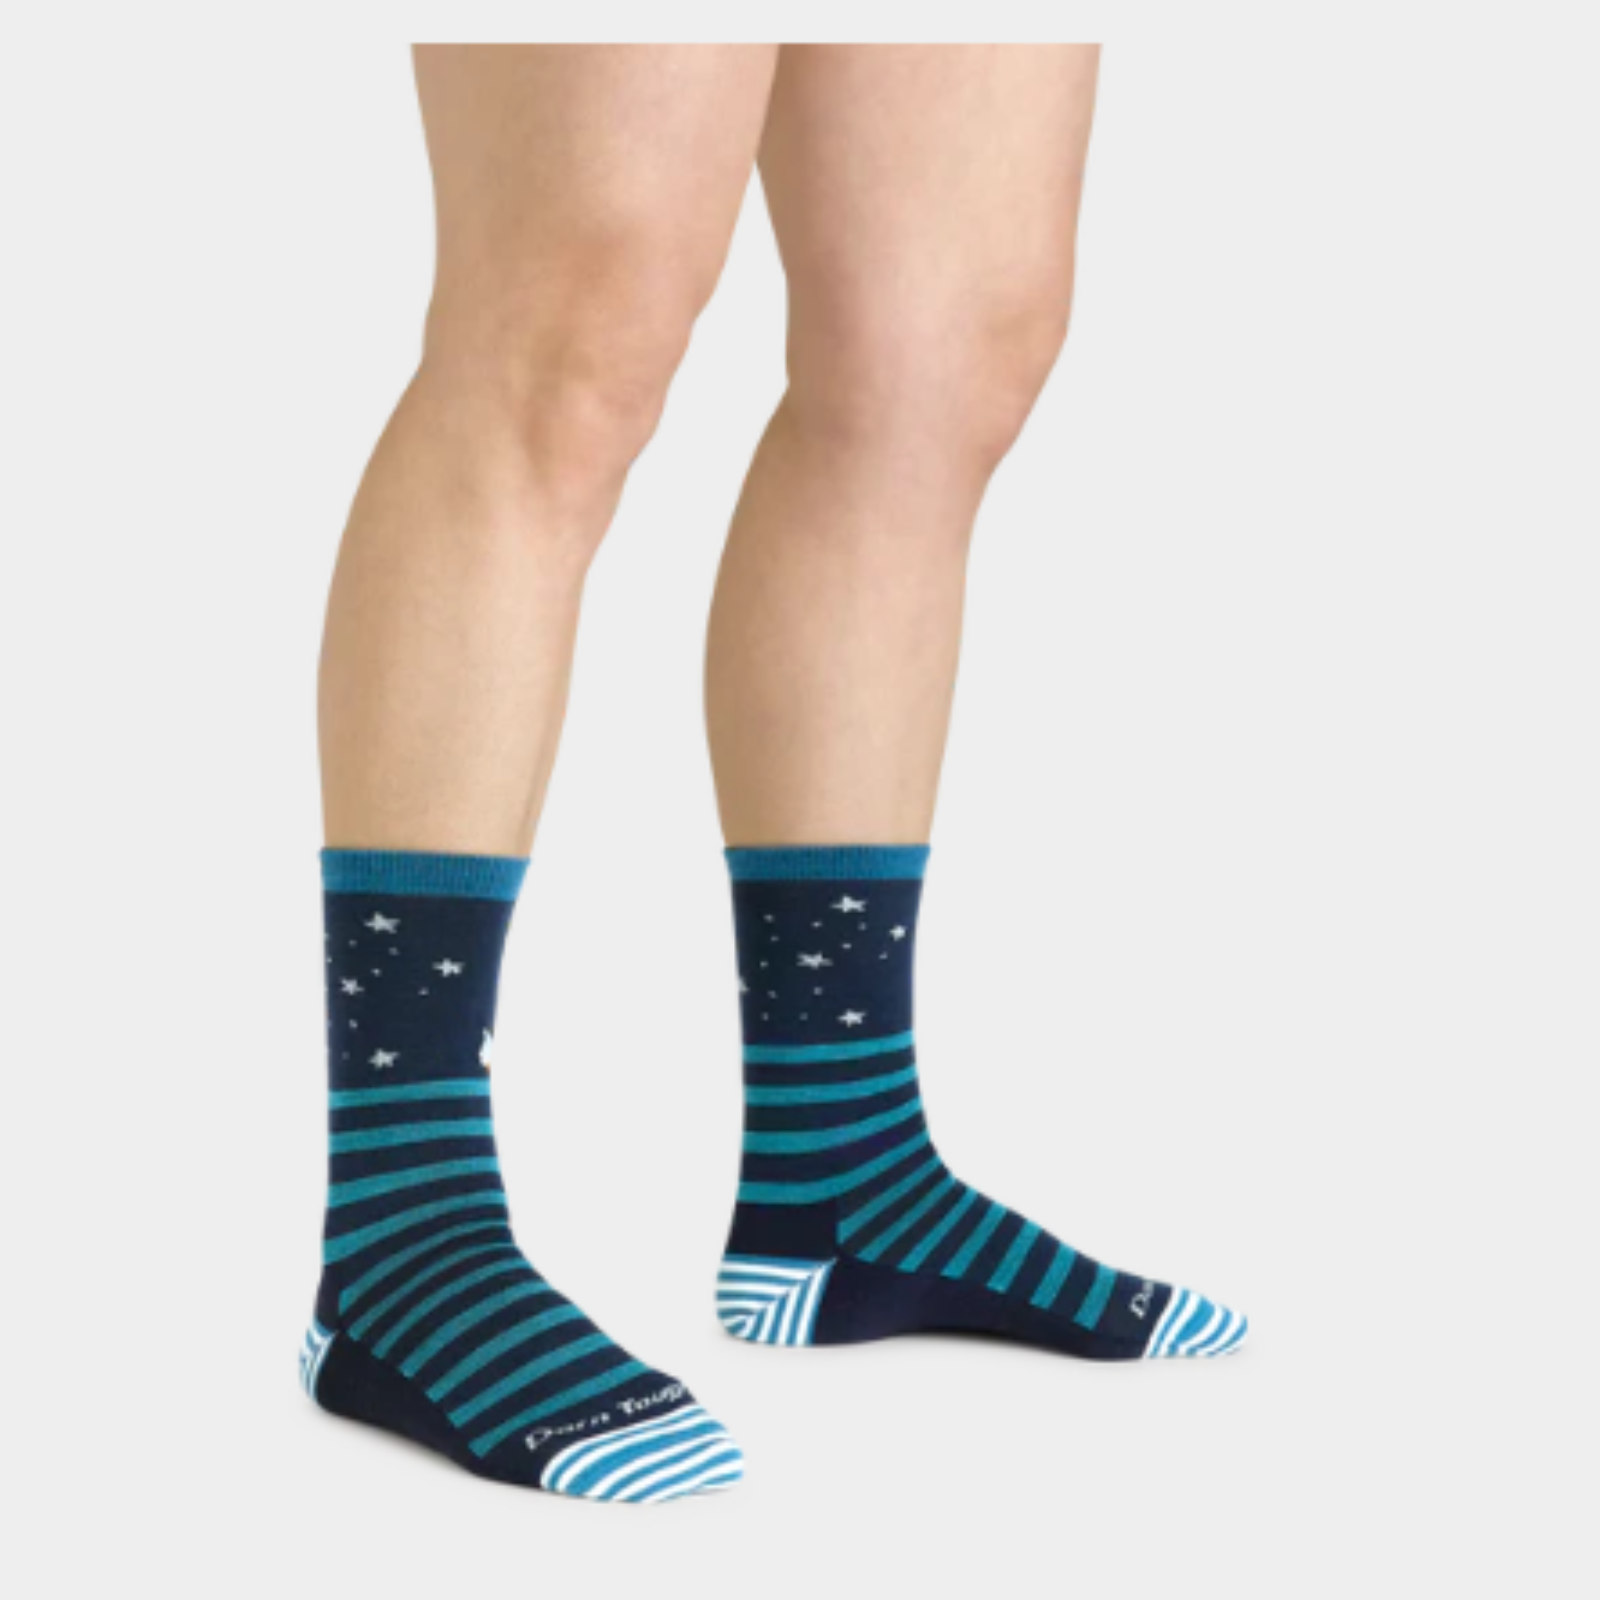 Dore Dore socks for men, women and children, tights, stay-ups